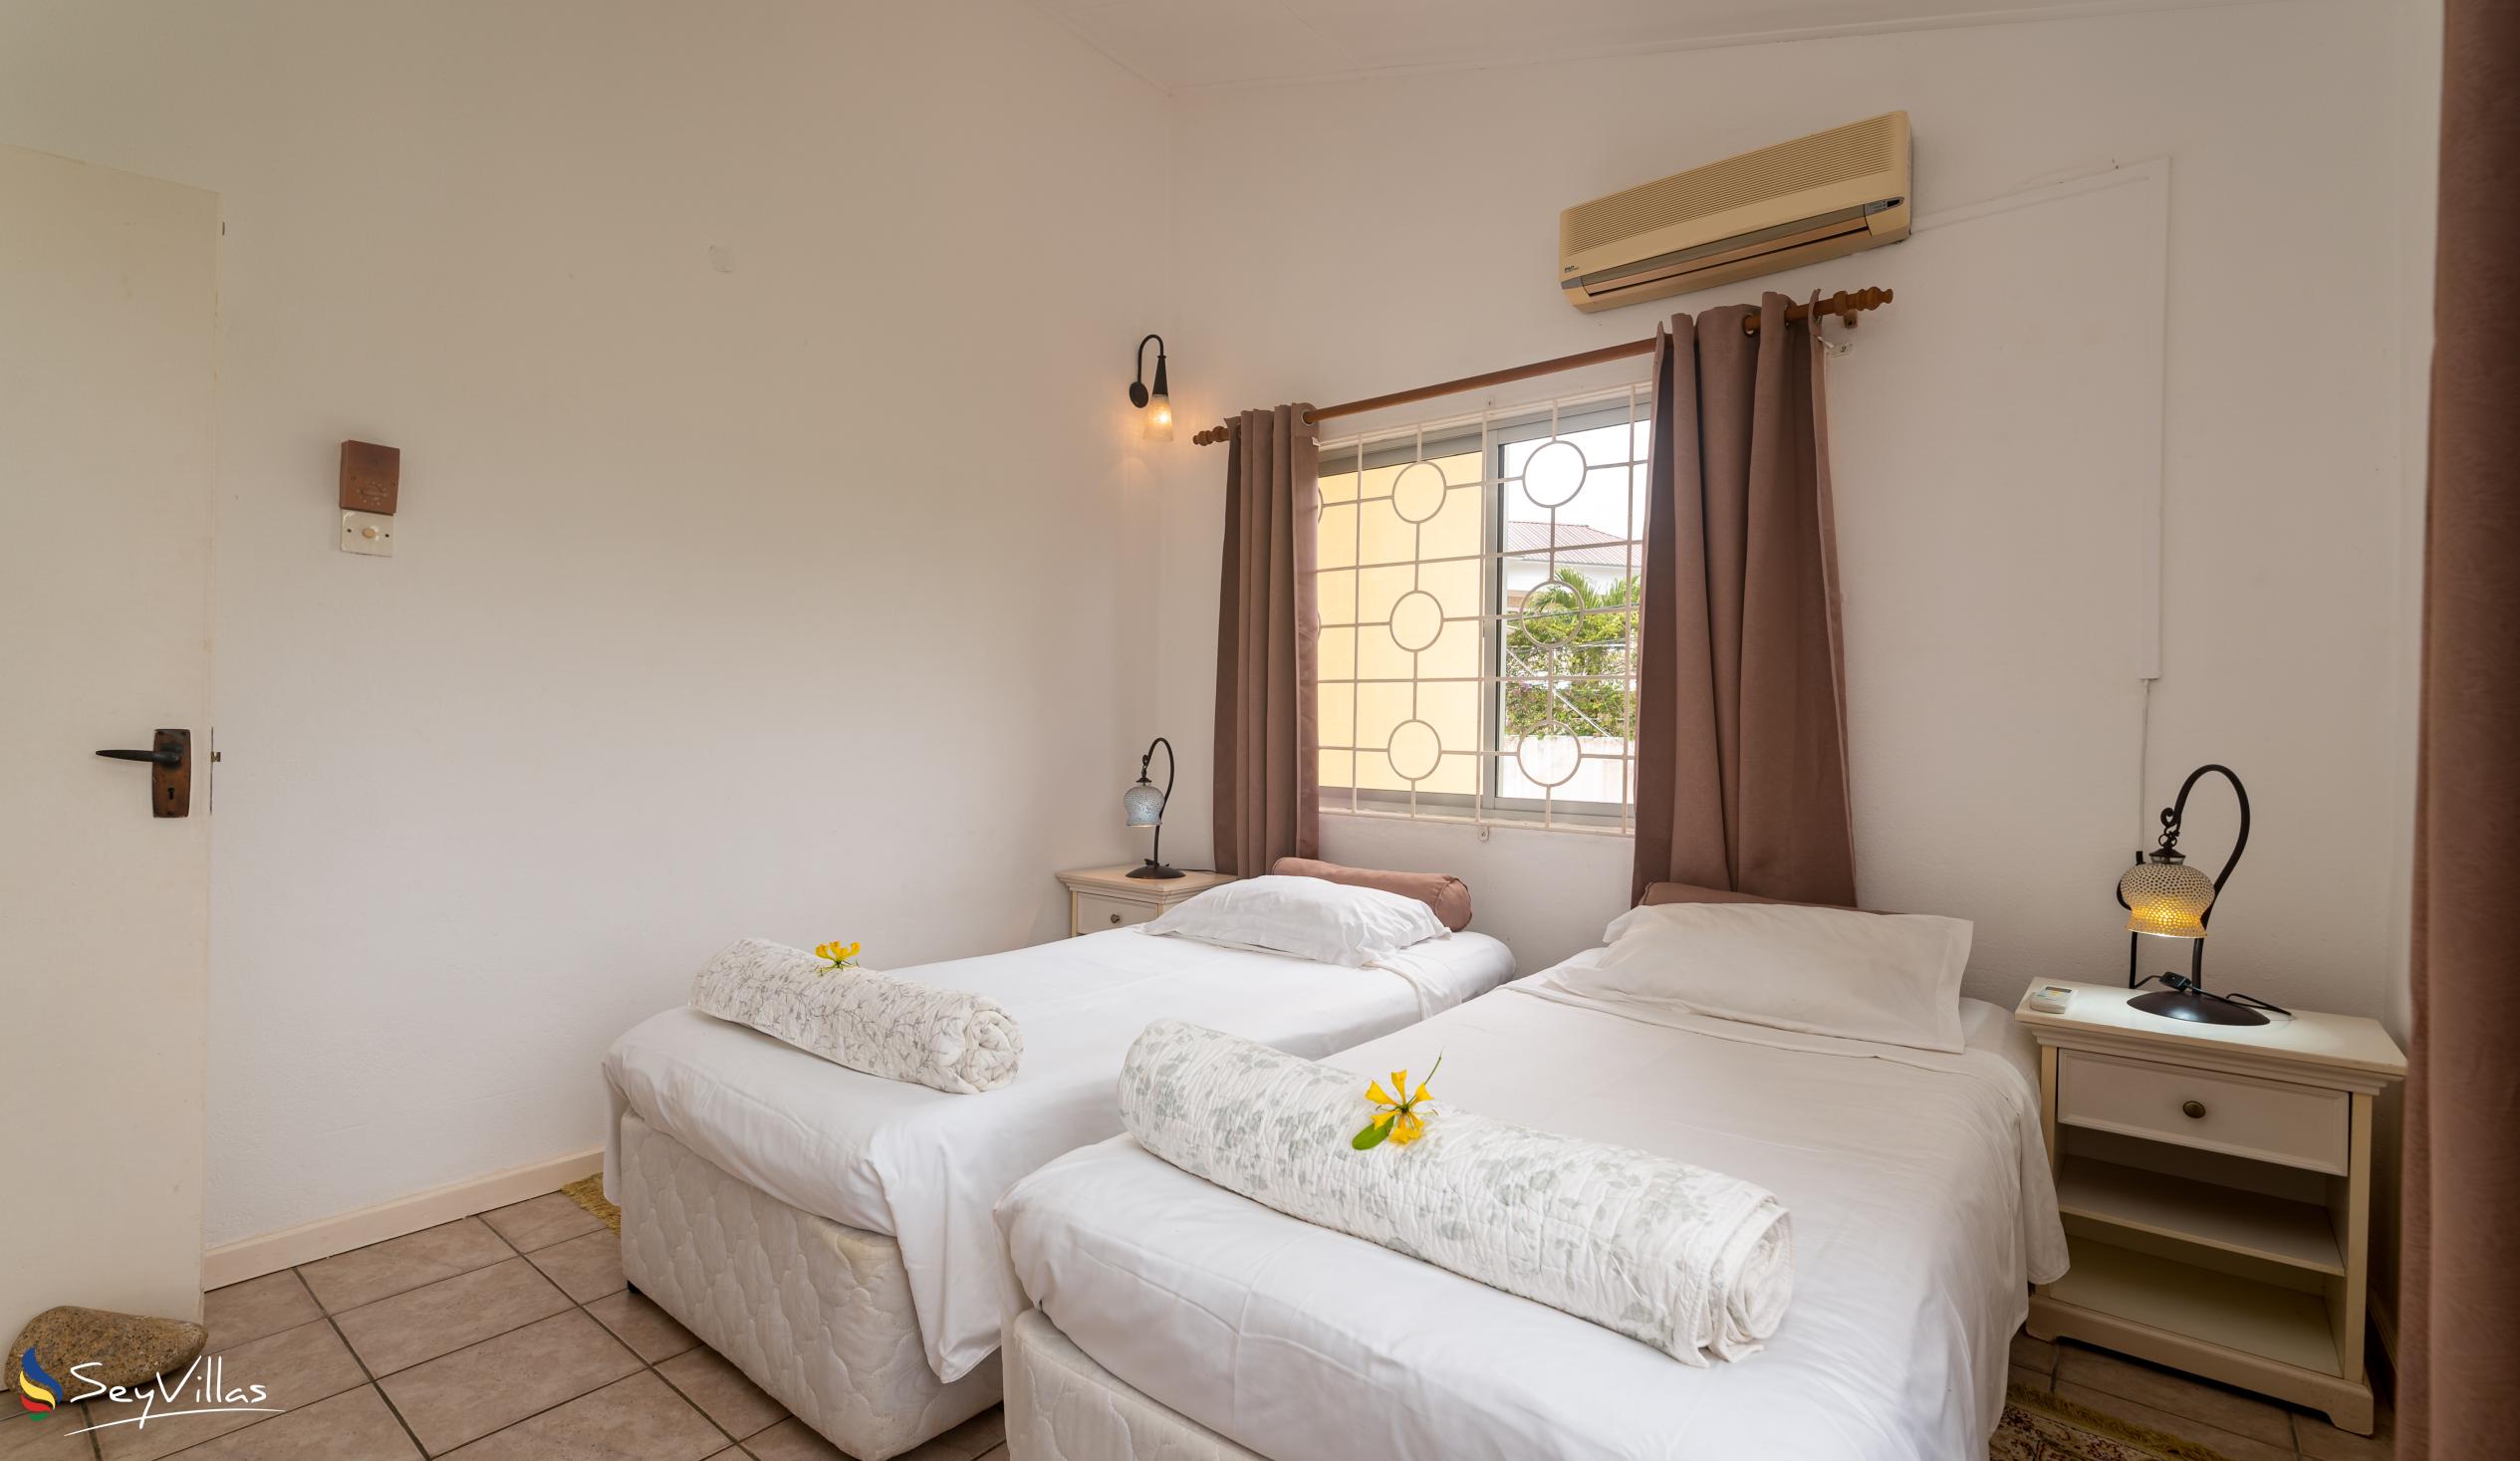 Photo 73: Residence Monte Cristo - 2-Bedroom Apartment - Mahé (Seychelles)